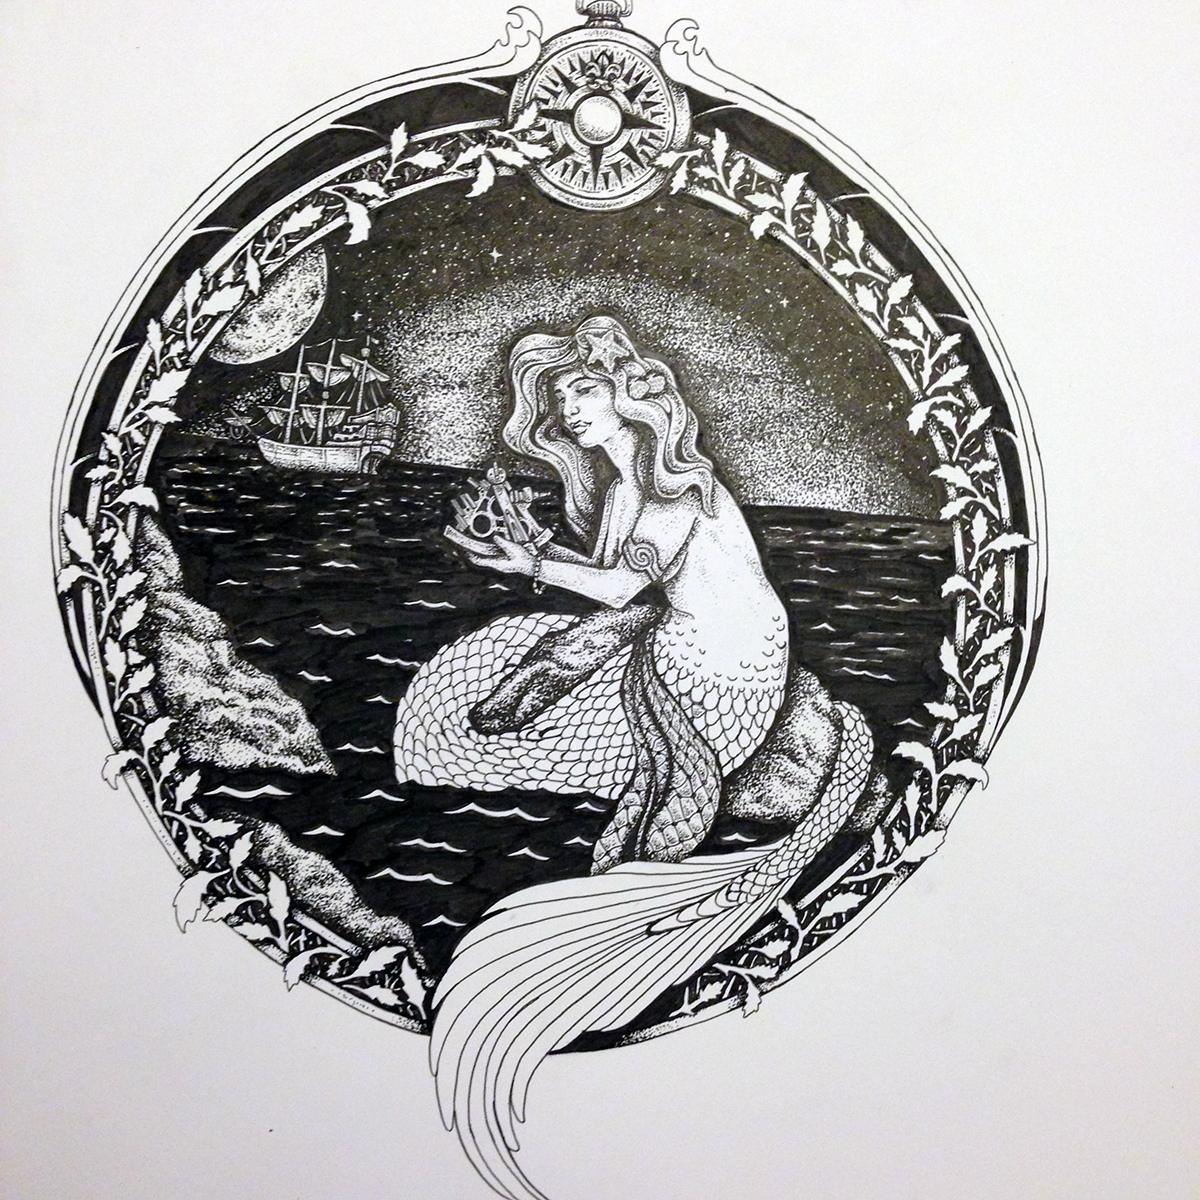 ink pen inkpen artist mermaid sailing nautical stars moon compass ornamental flourish Nature fantasy whimsical